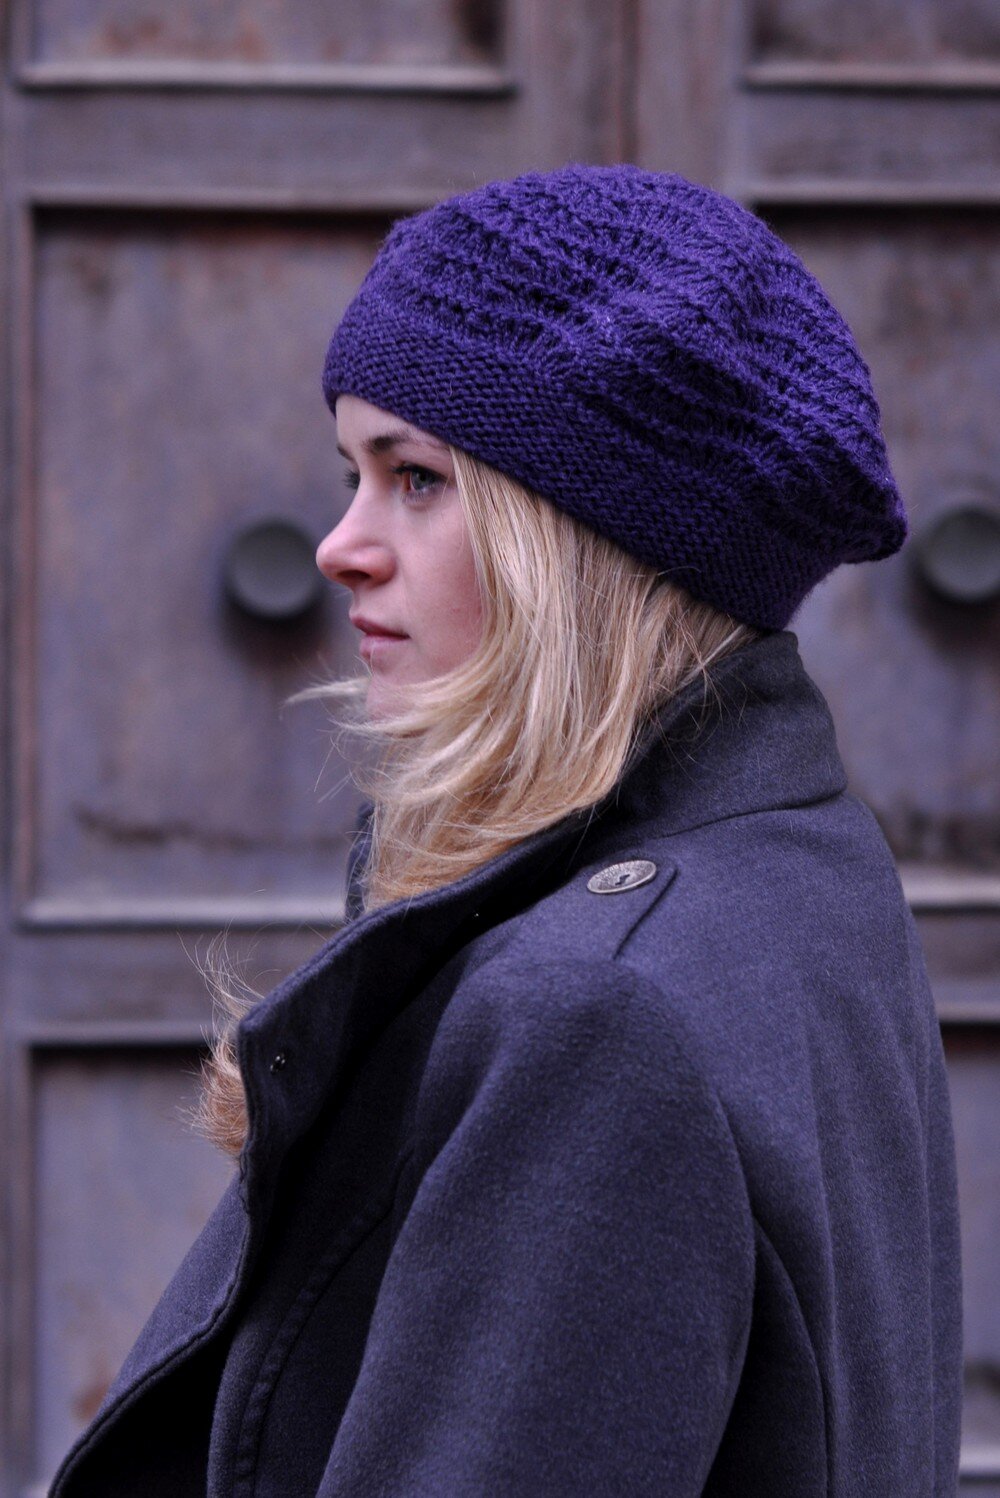 Mayrose hand knitting beret pattern for DK weight yarn